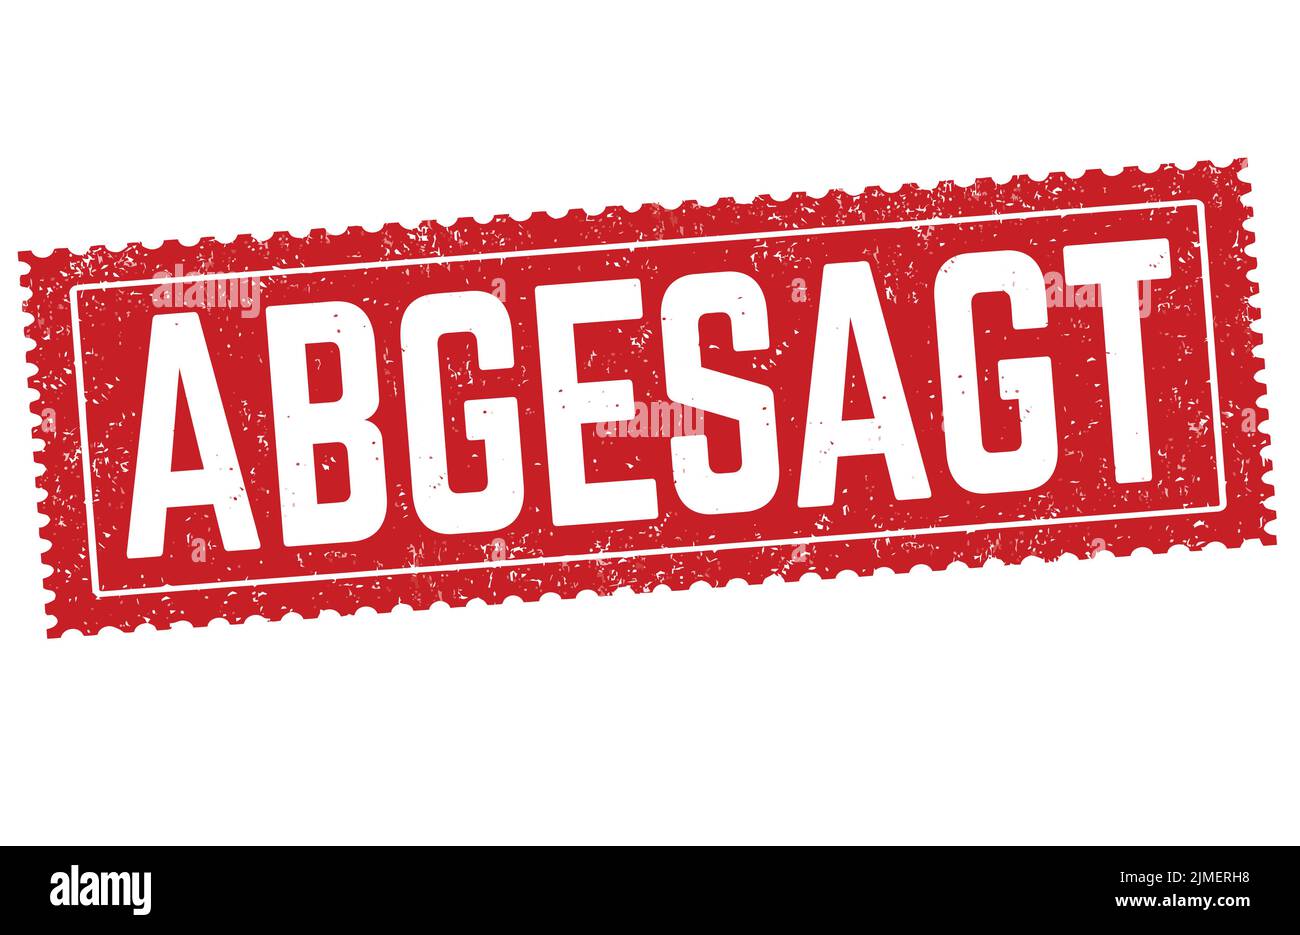 Abgesagt ( Event canceled in german language )  grunge rubber stamp on white background, vector illustration Stock Vector